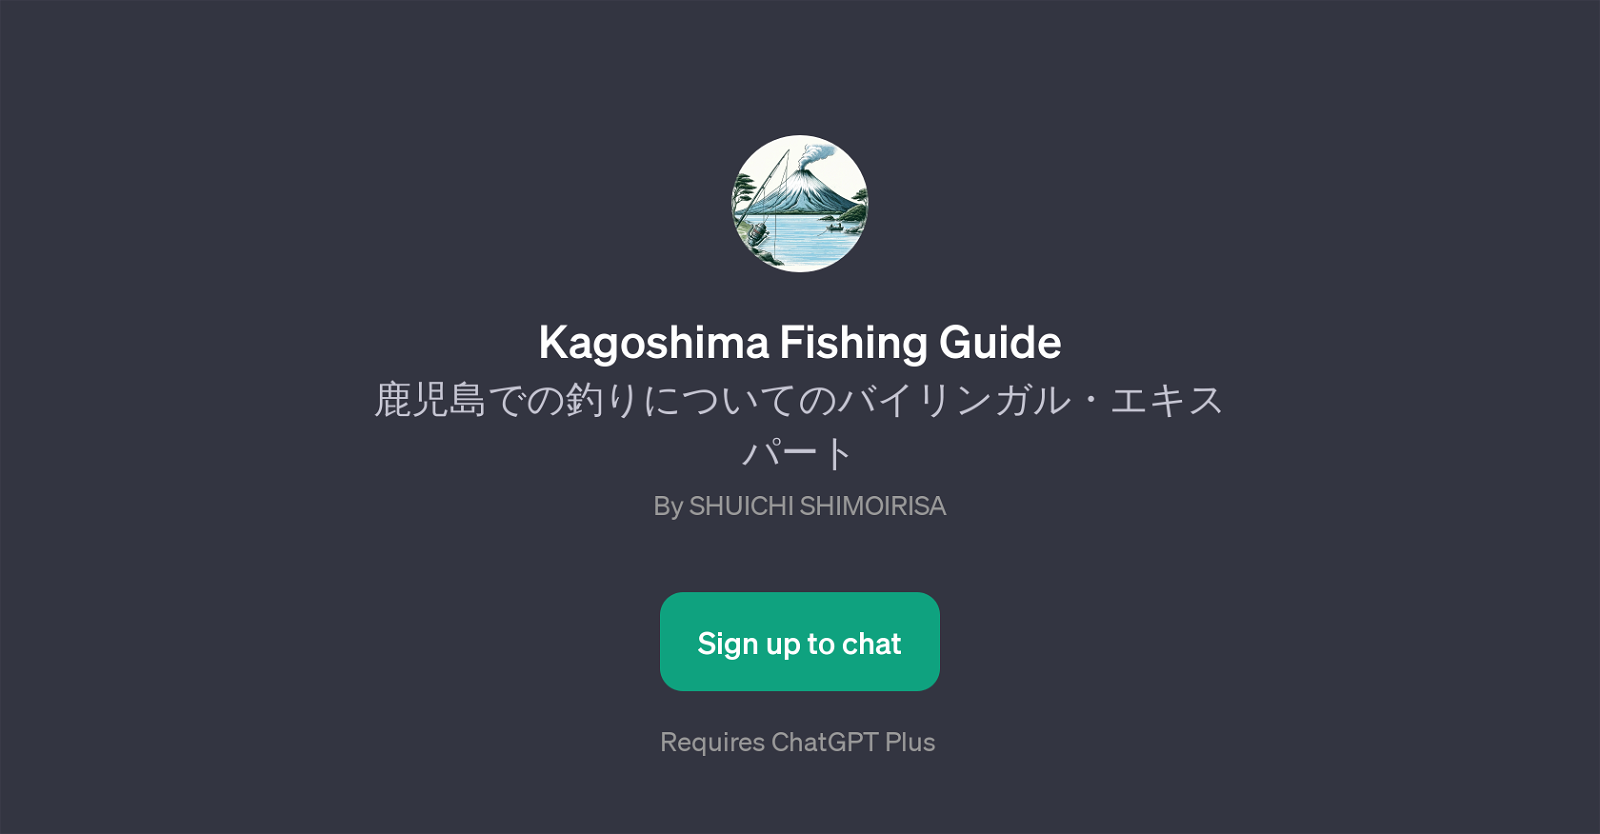 Kagoshima Fishing Guide website